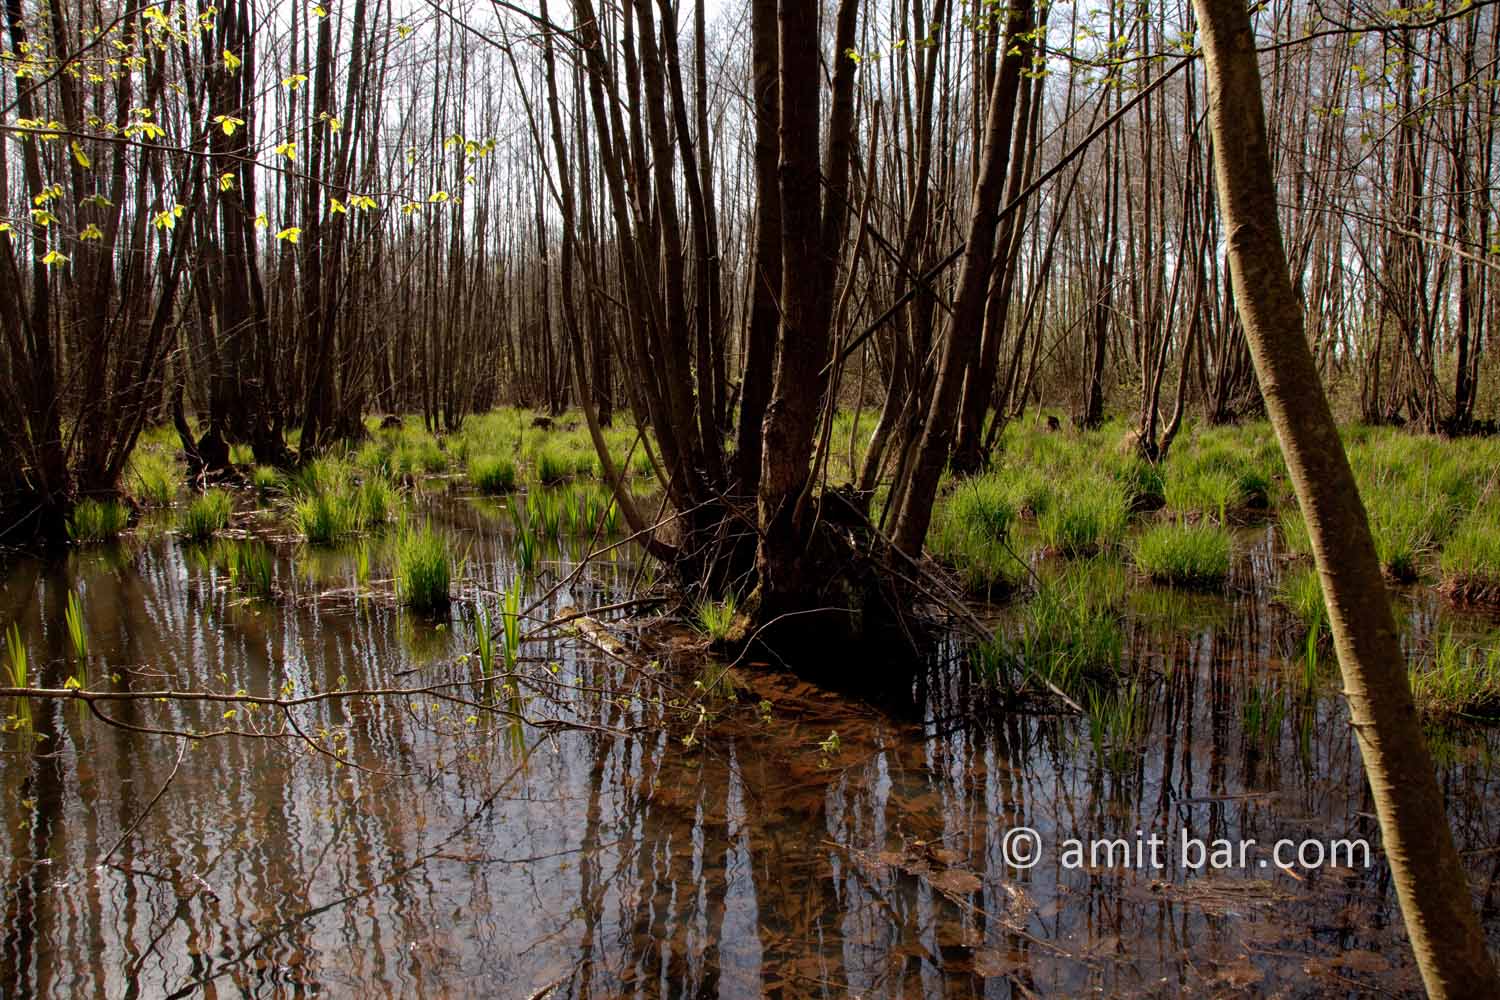 Swamp II: Swamp in Doetinchem, The Netherlands